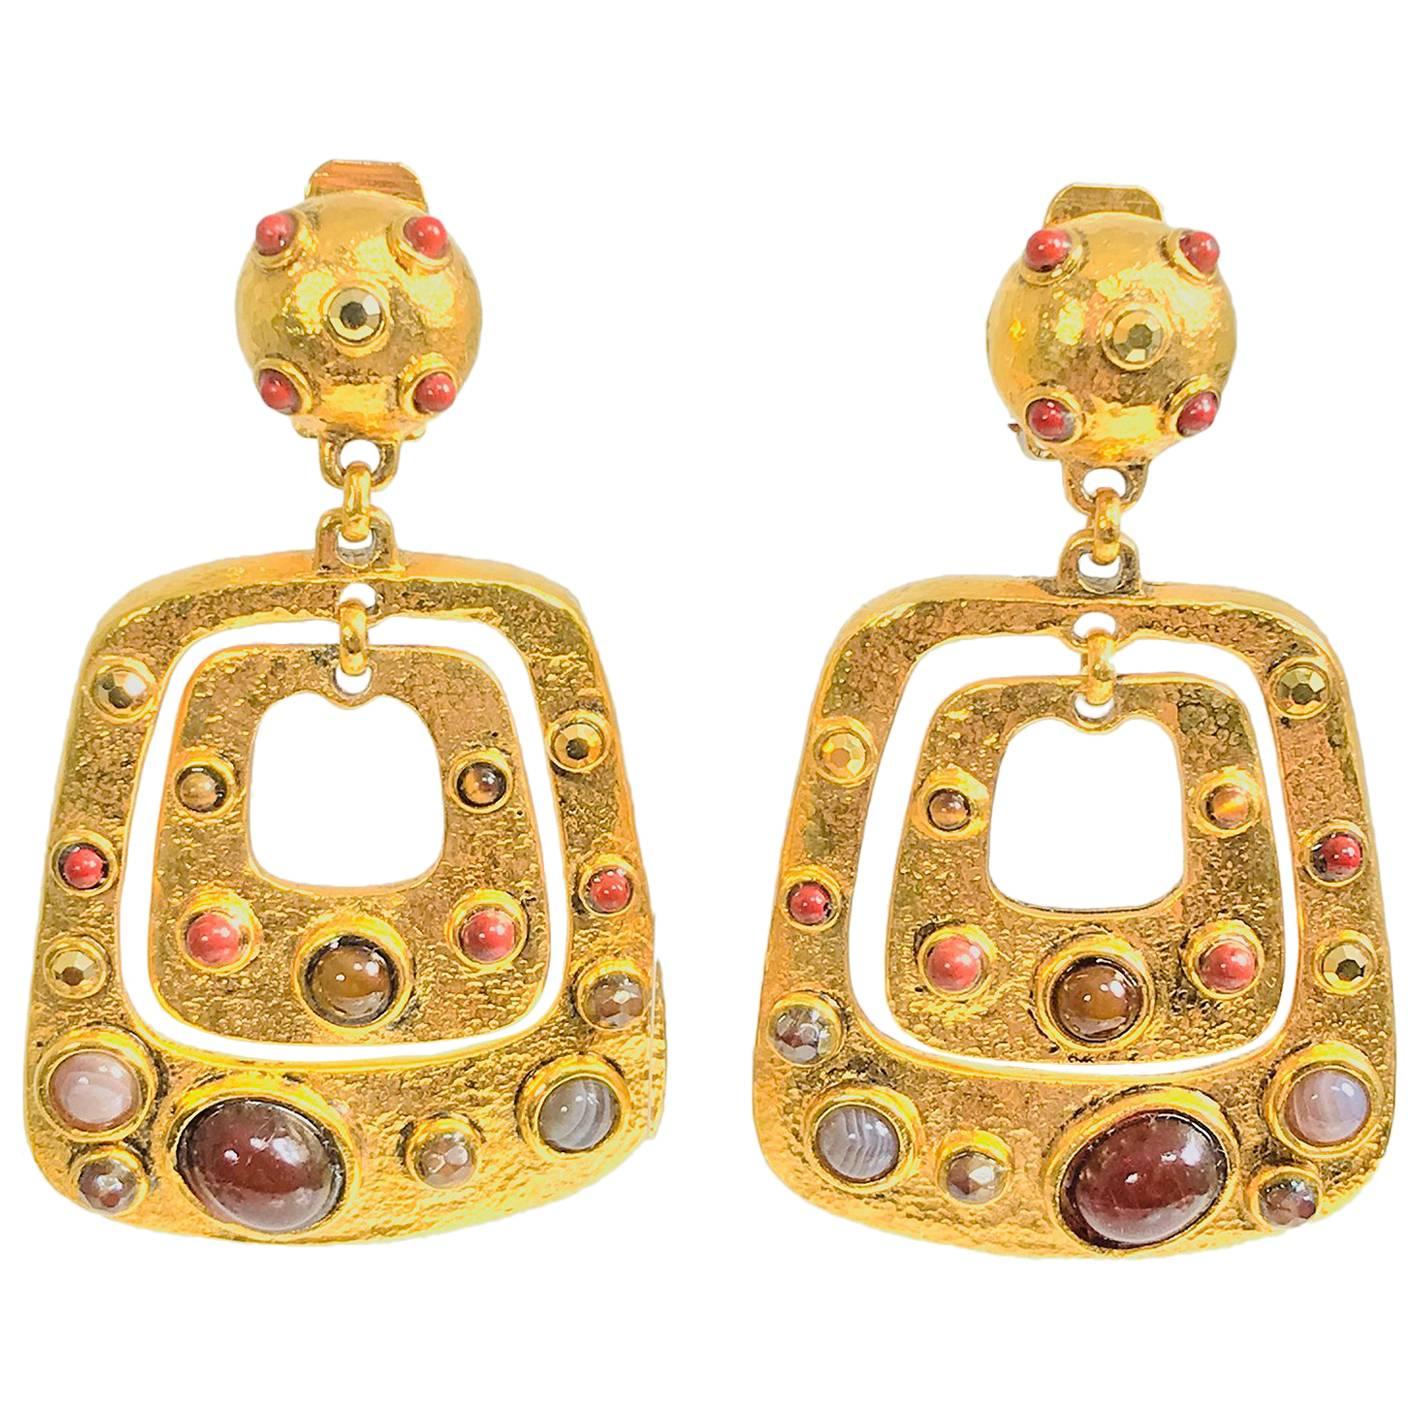 Jose and Maria Berrera stone set gold door knocker earrings